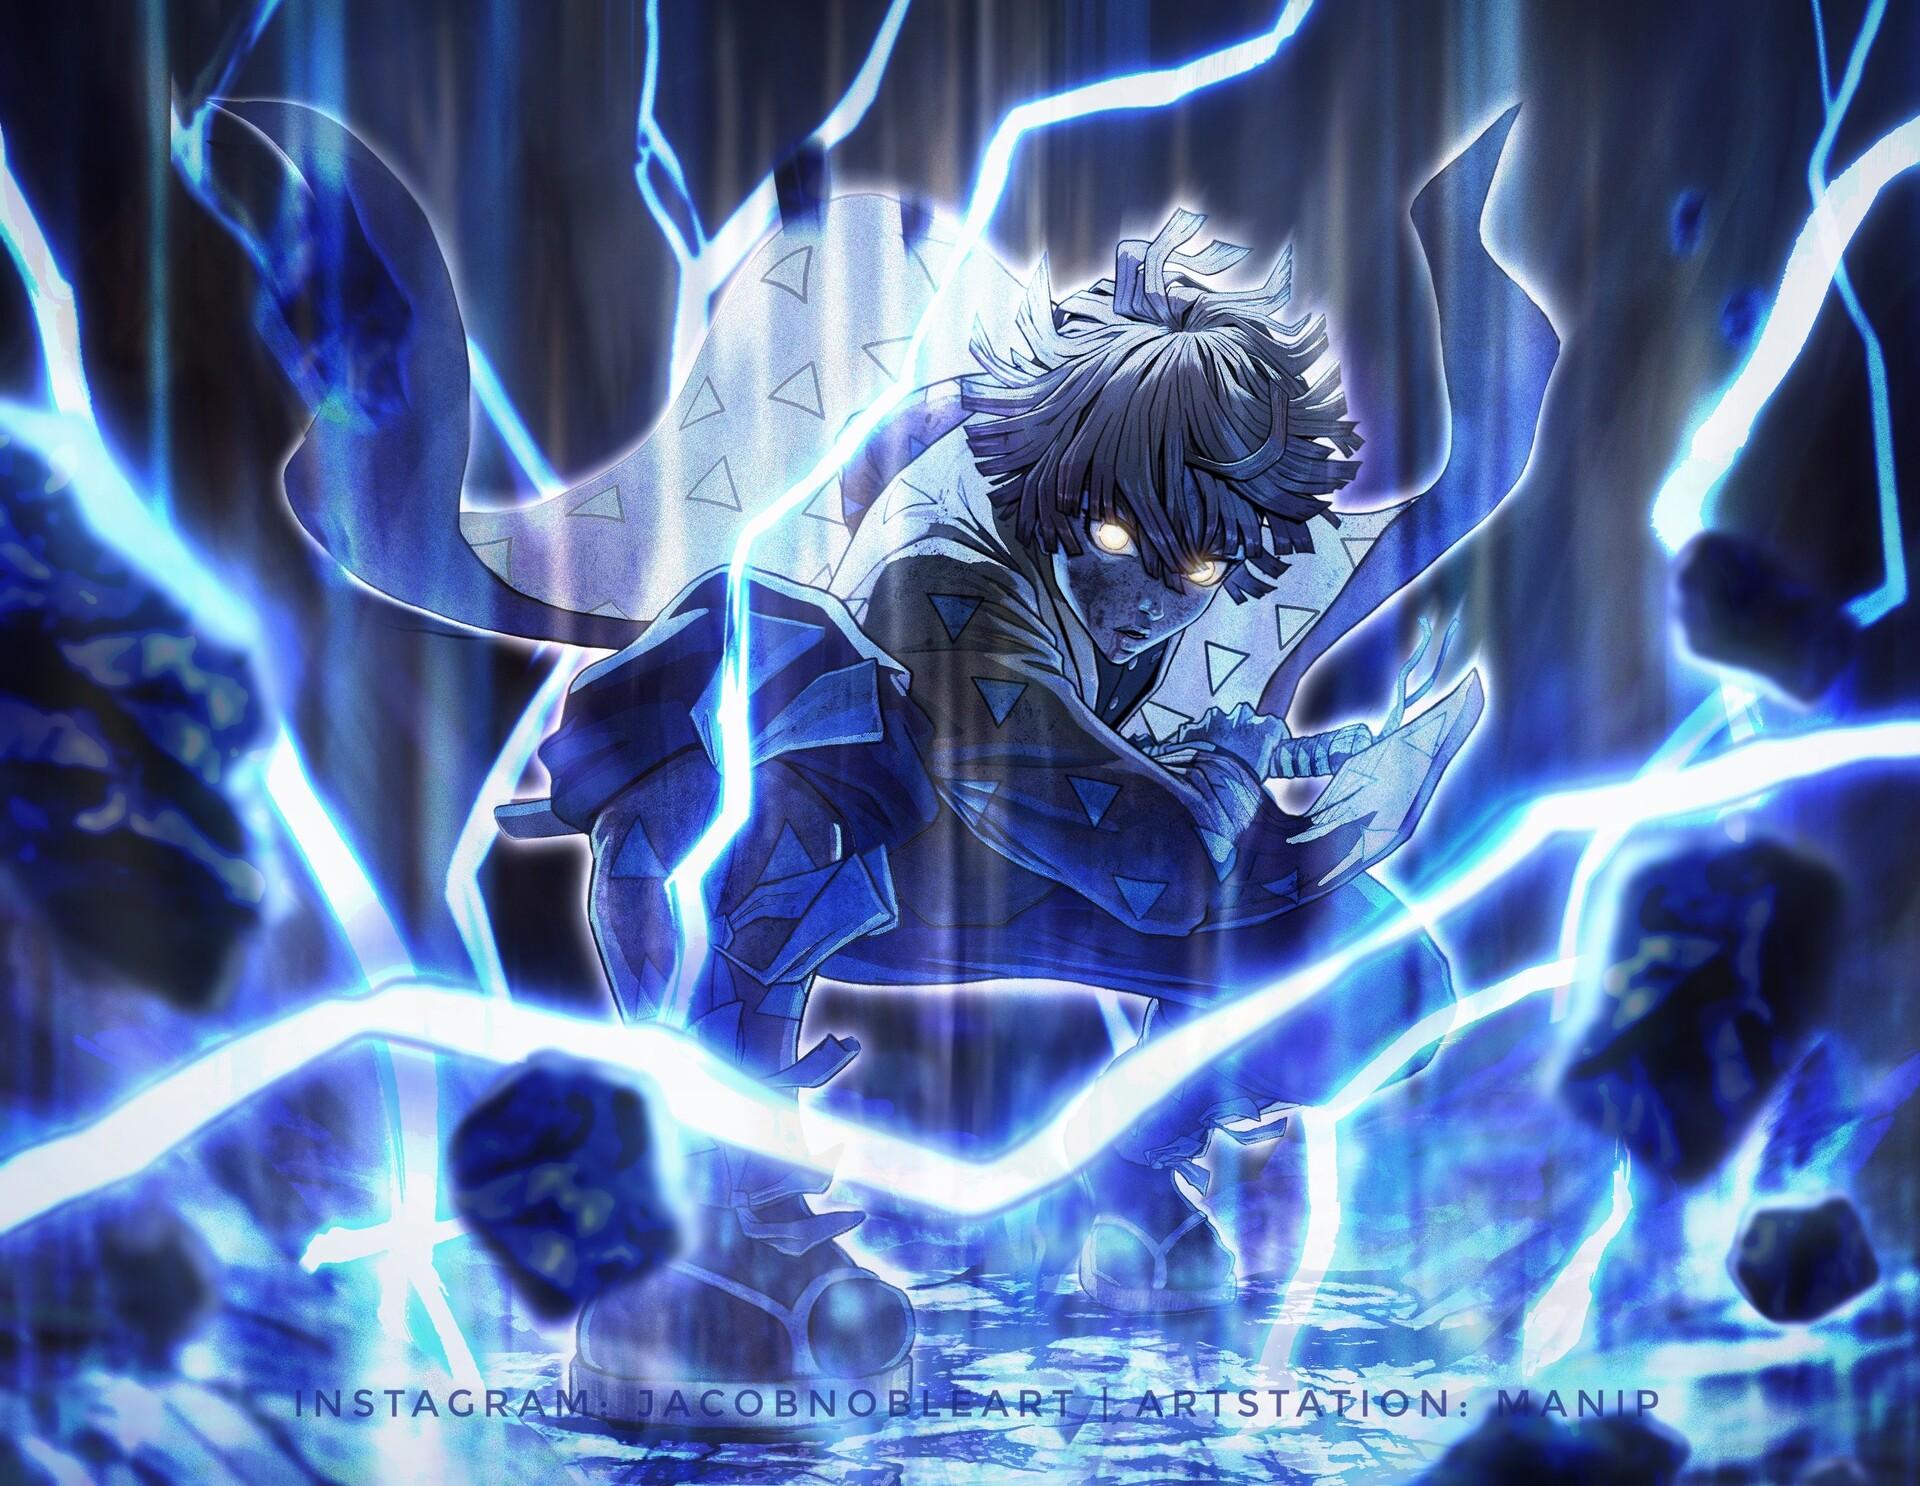 Anime Demon Slayer Kimetsu no Yaiba HD Wallpaper by Jacob Noble